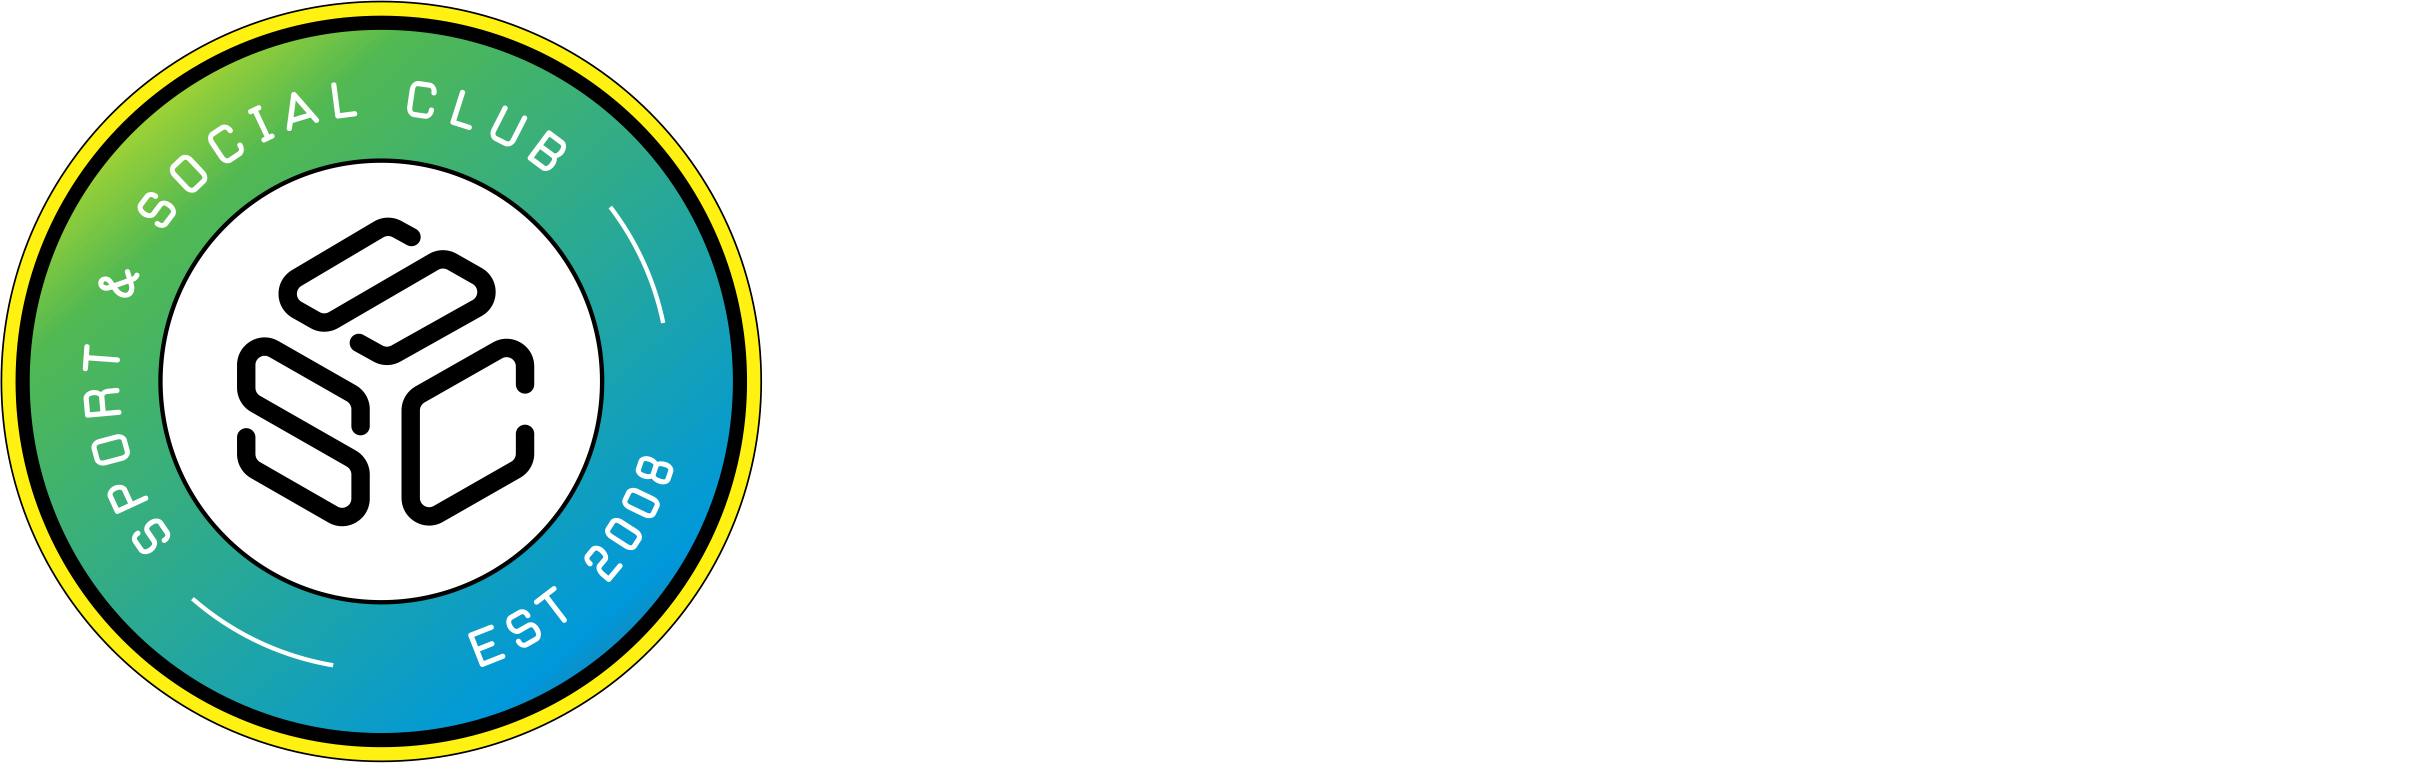 Grand Rapids Sport & Social Club - Grand Rapids Sport And Social Club (2416x763)